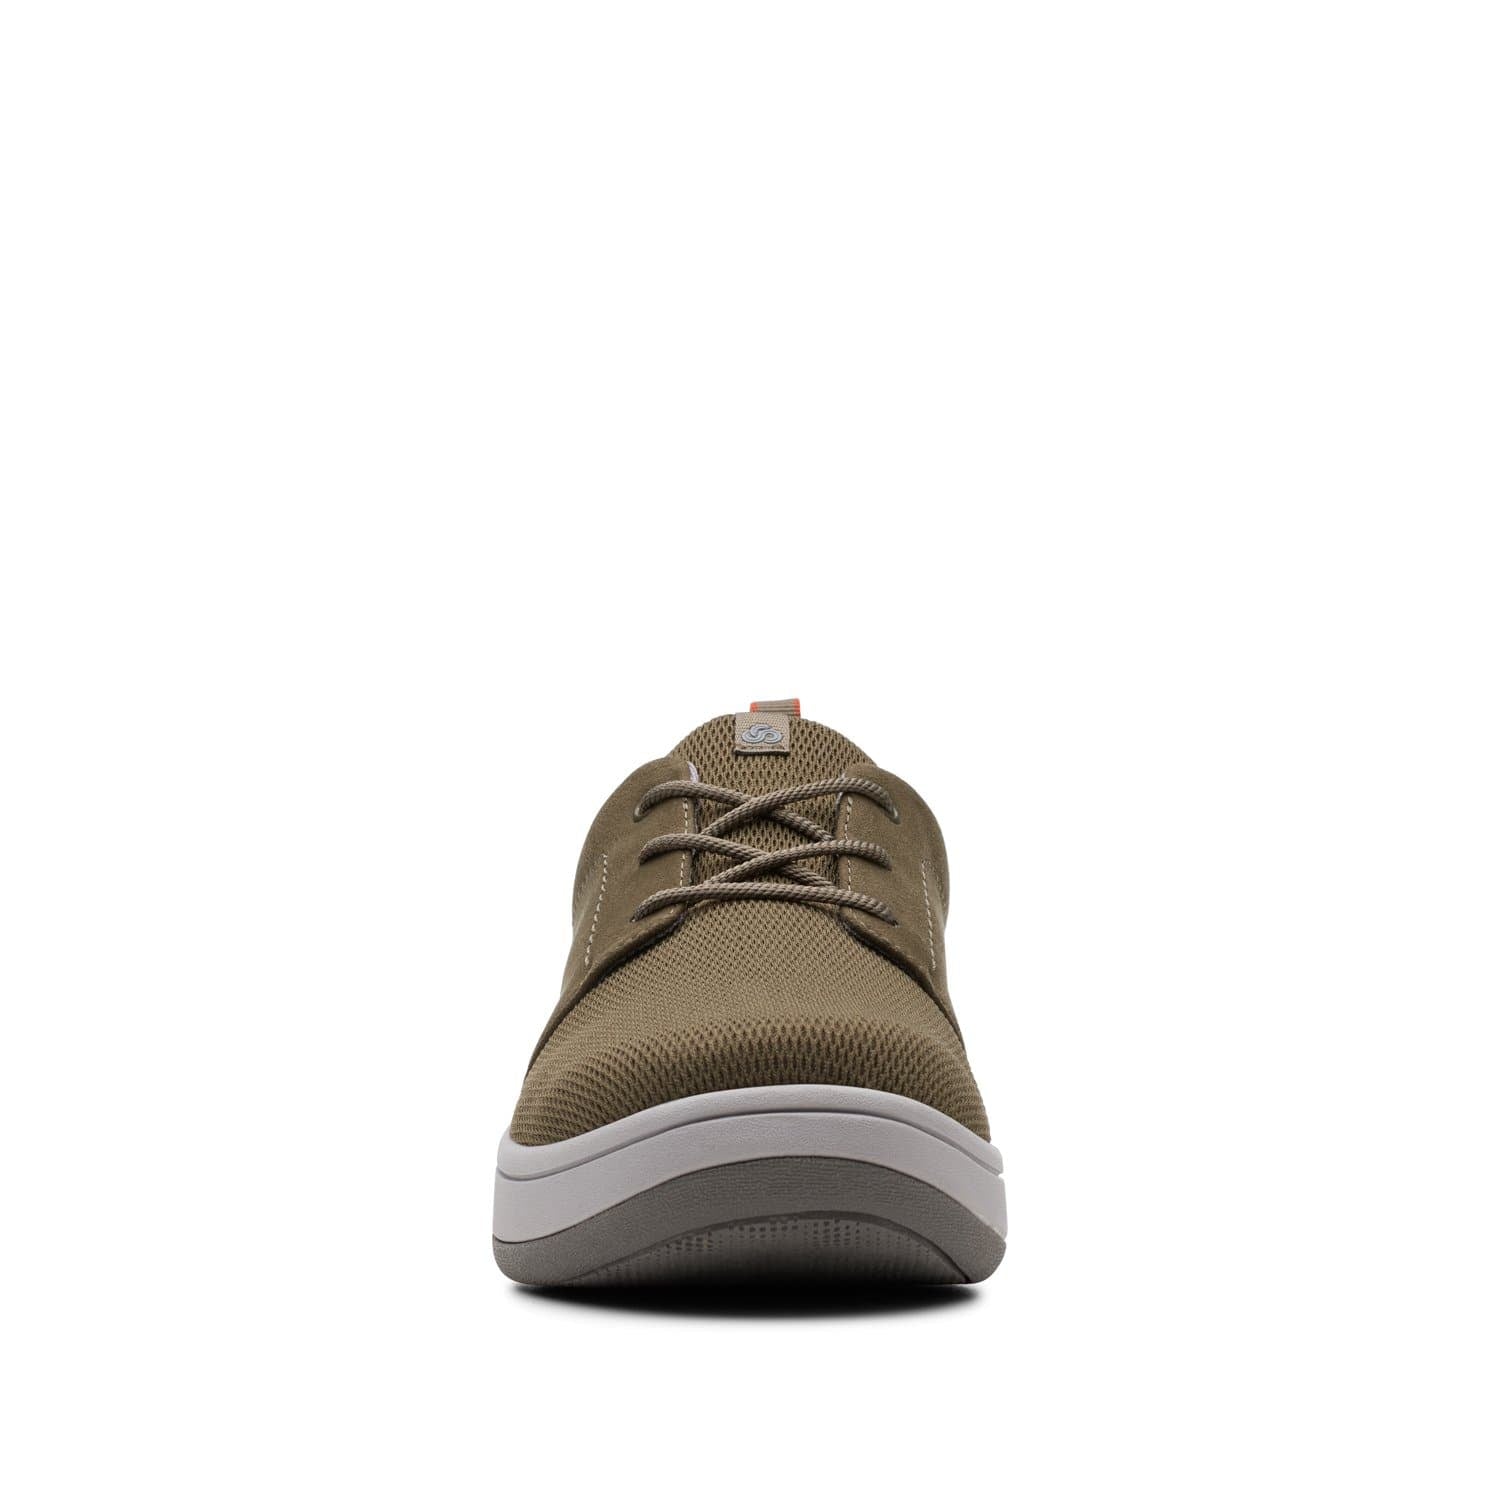 Clarks-Arla-Free-Men's-Shoes-Khaki-26145994